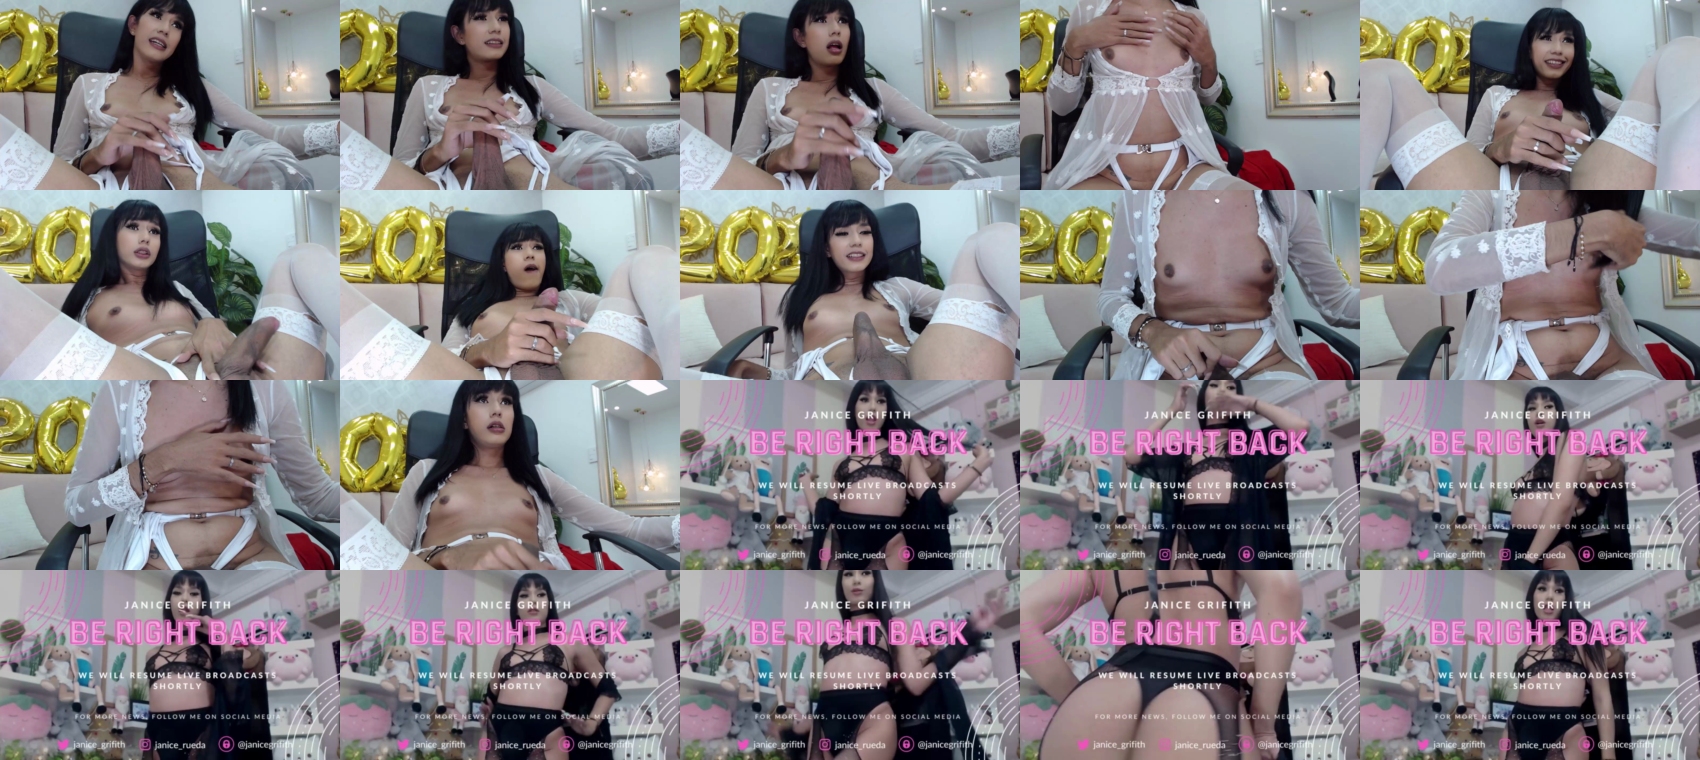 janicegrifith boobs CAM SHOW @ Chaturbate 31-12-2022